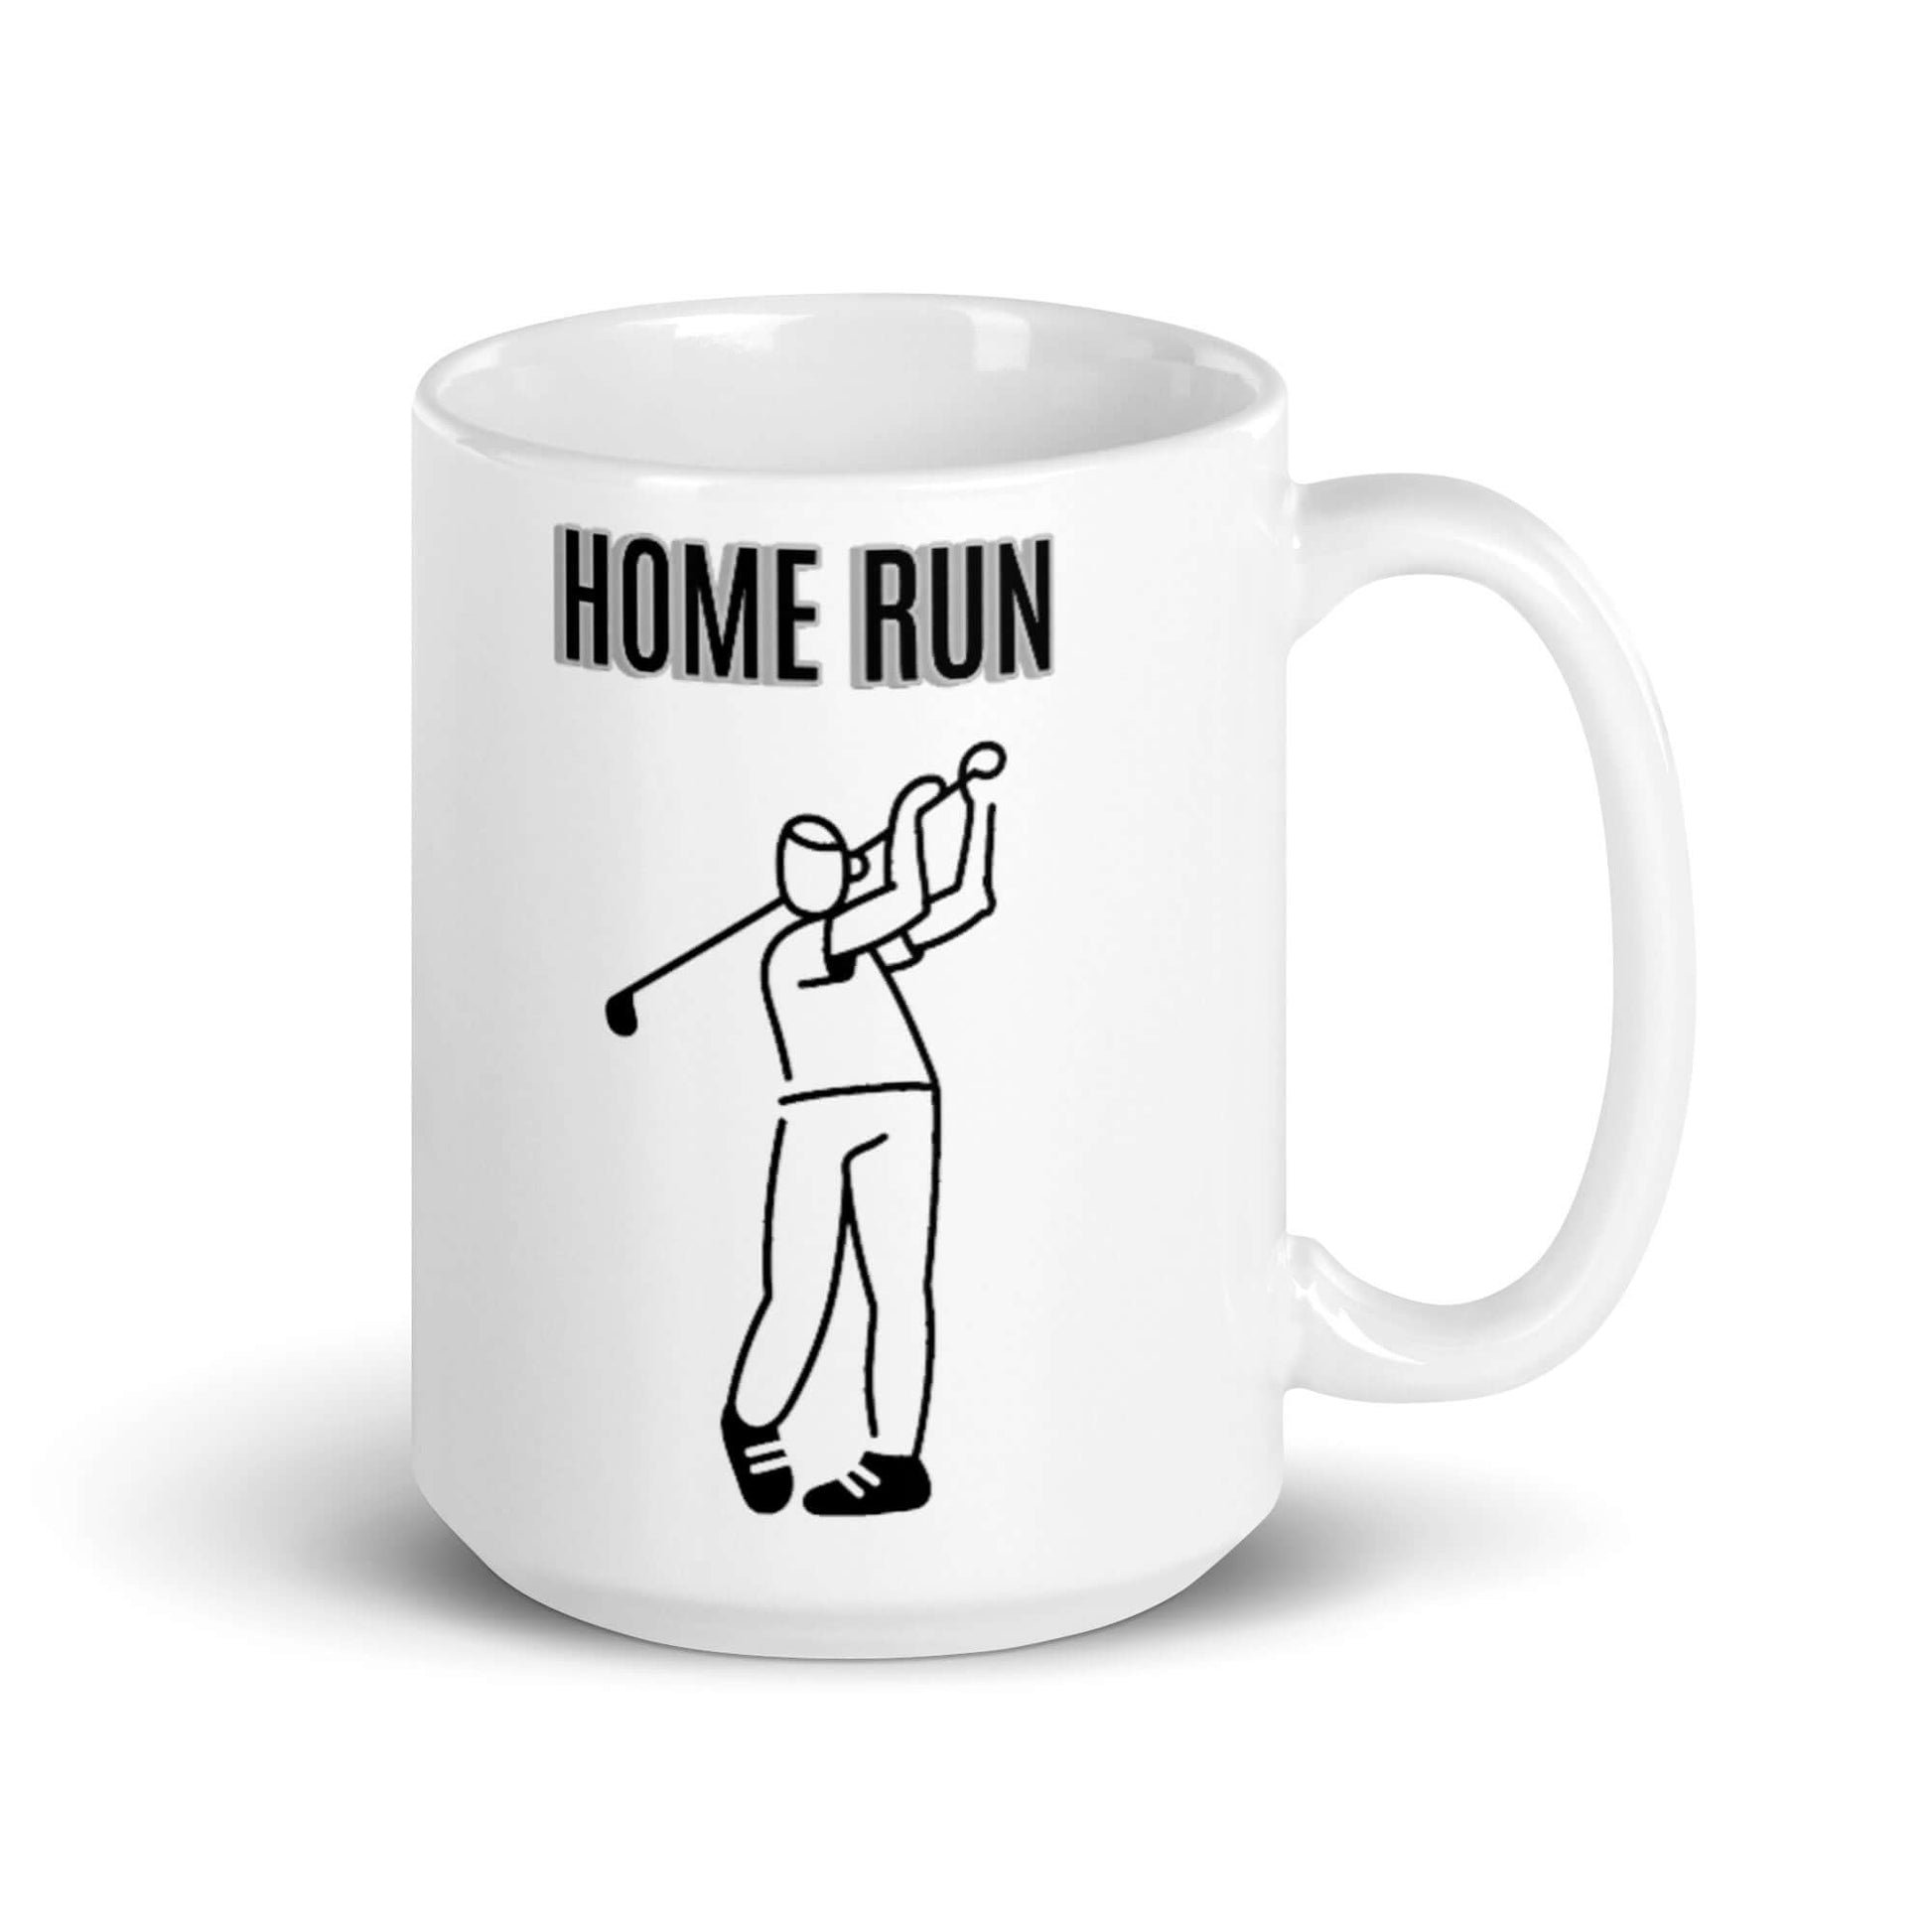 GOLF - HOME RUN! - White glossy mug - Horrible Designs